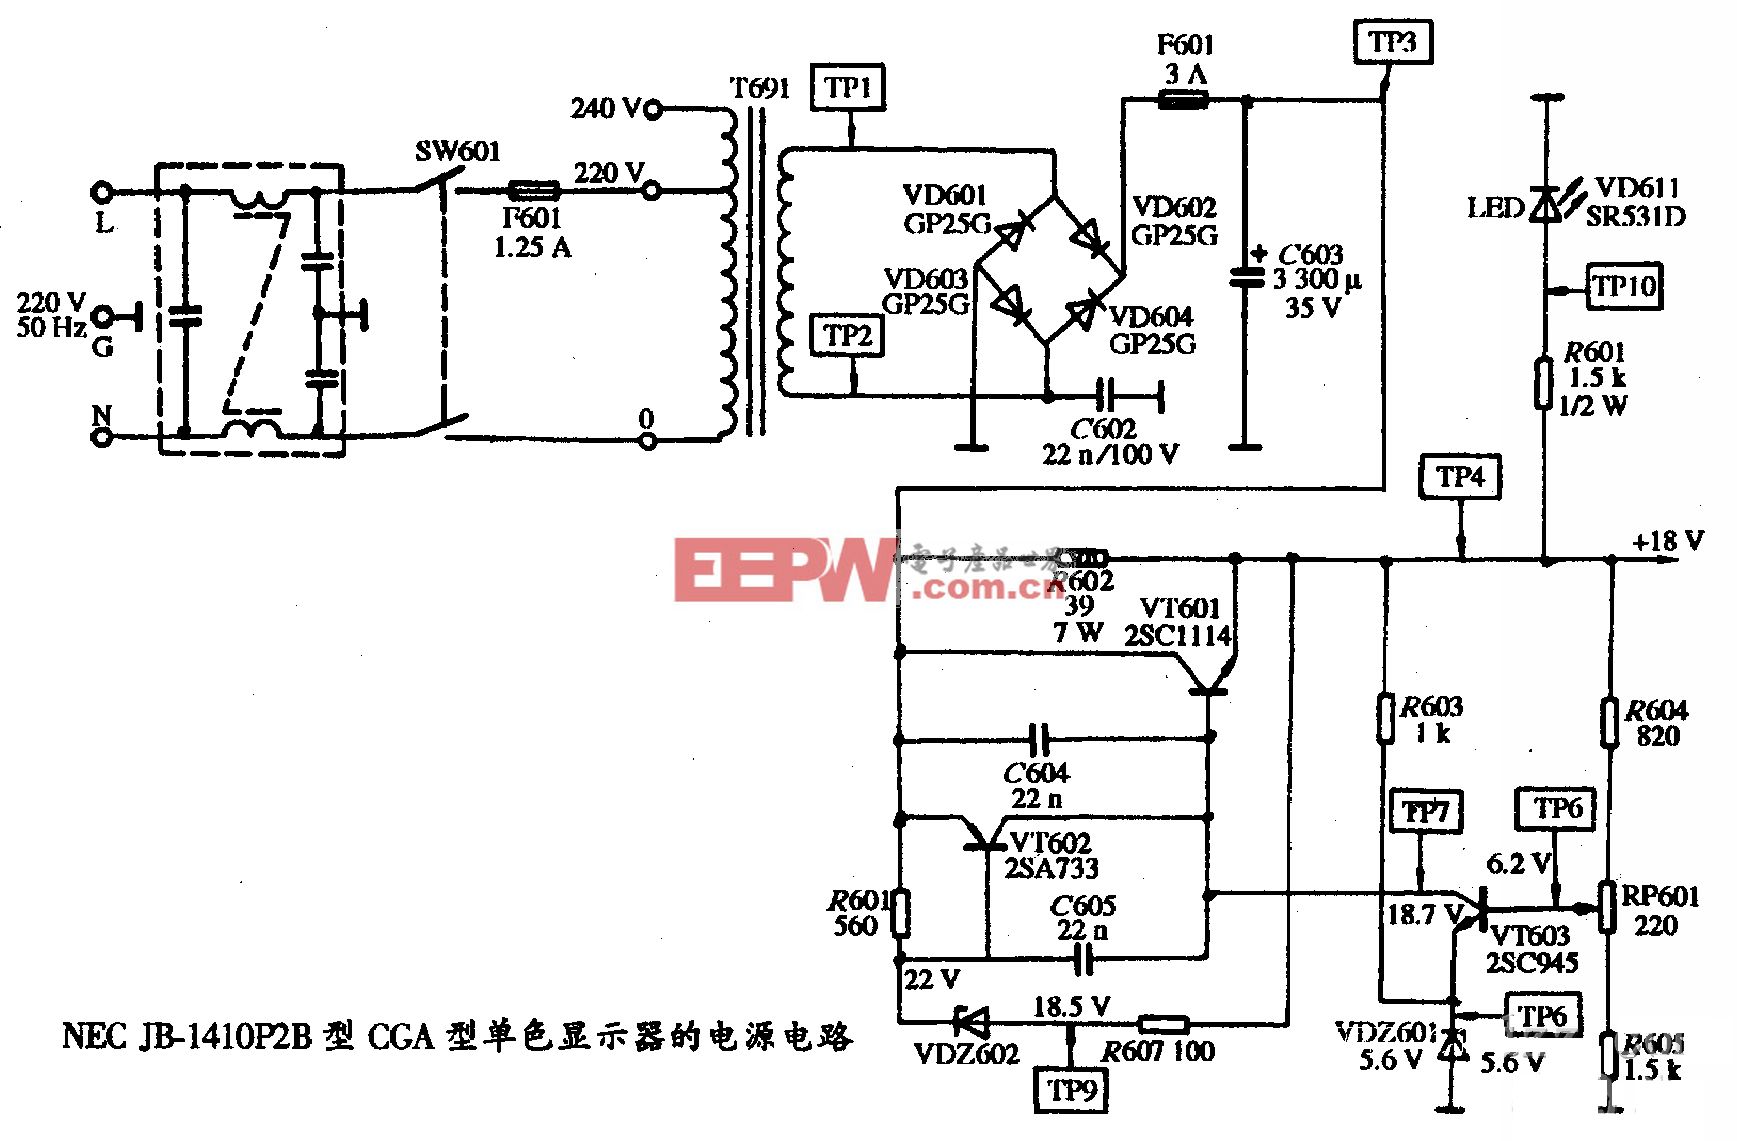 NEC JB-1410P2B型CGA型单色显示器的电源电路图